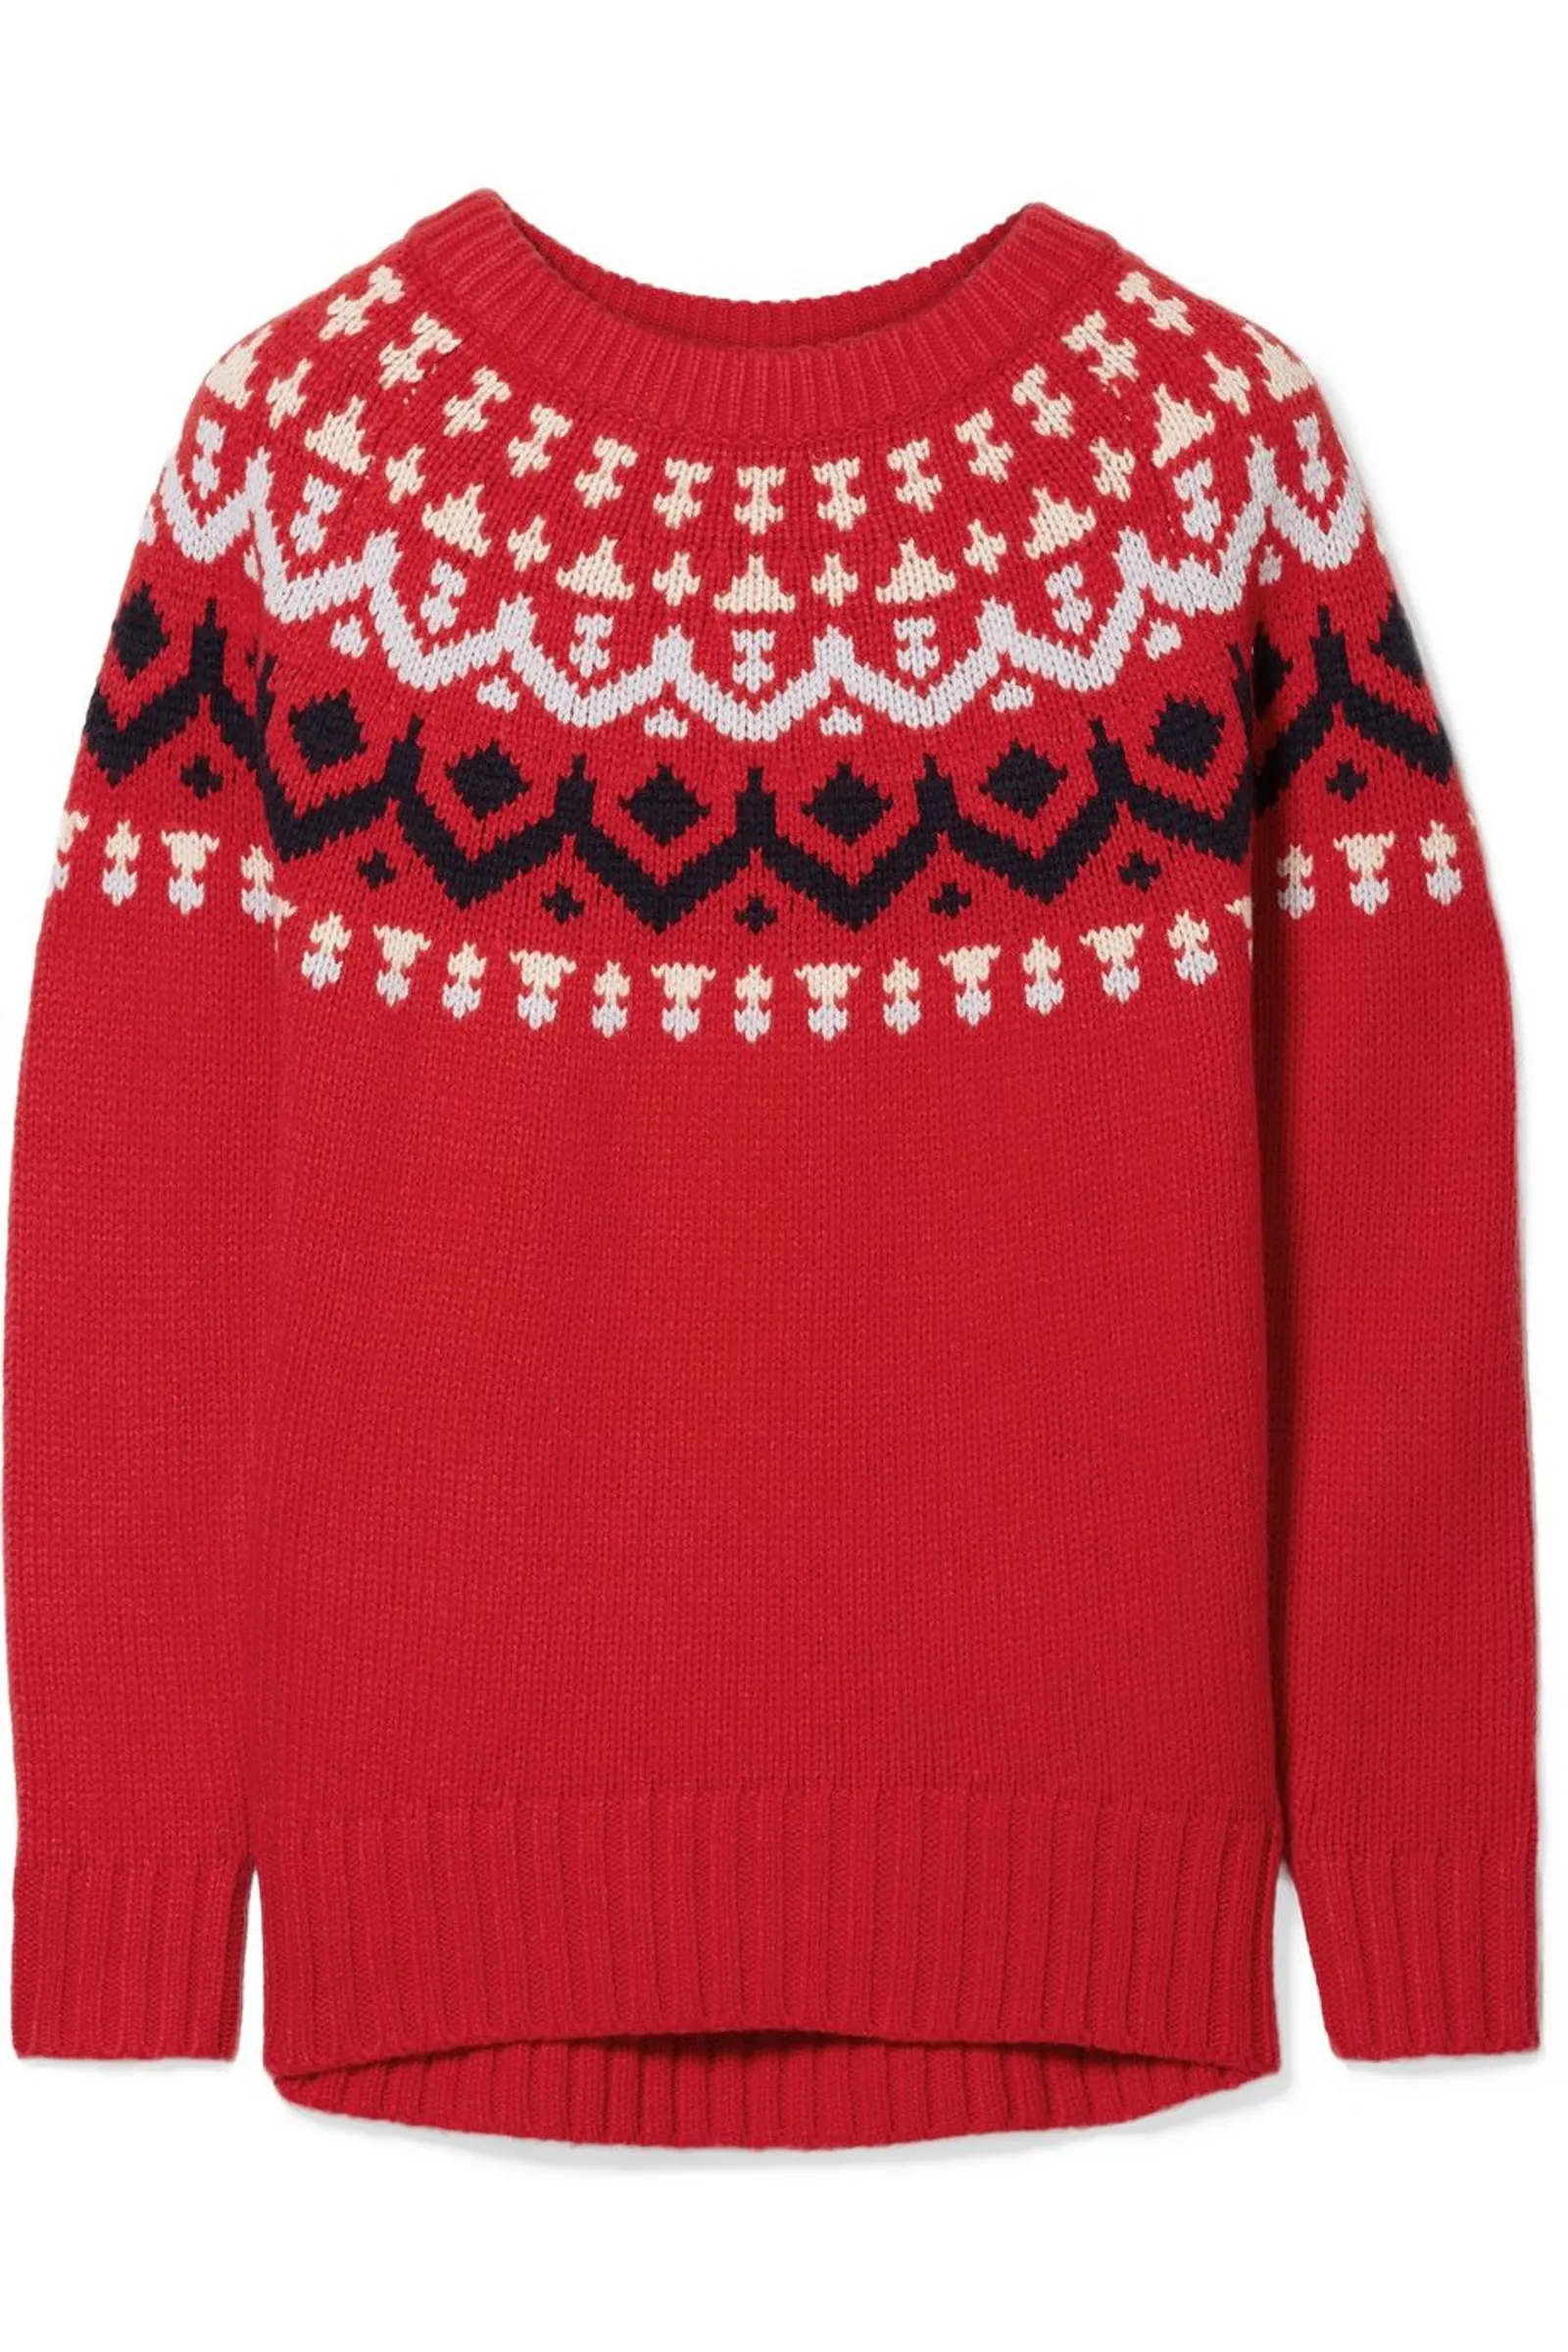 #PopbelaOOTD: Sweater Festive untuk Look yang Playful